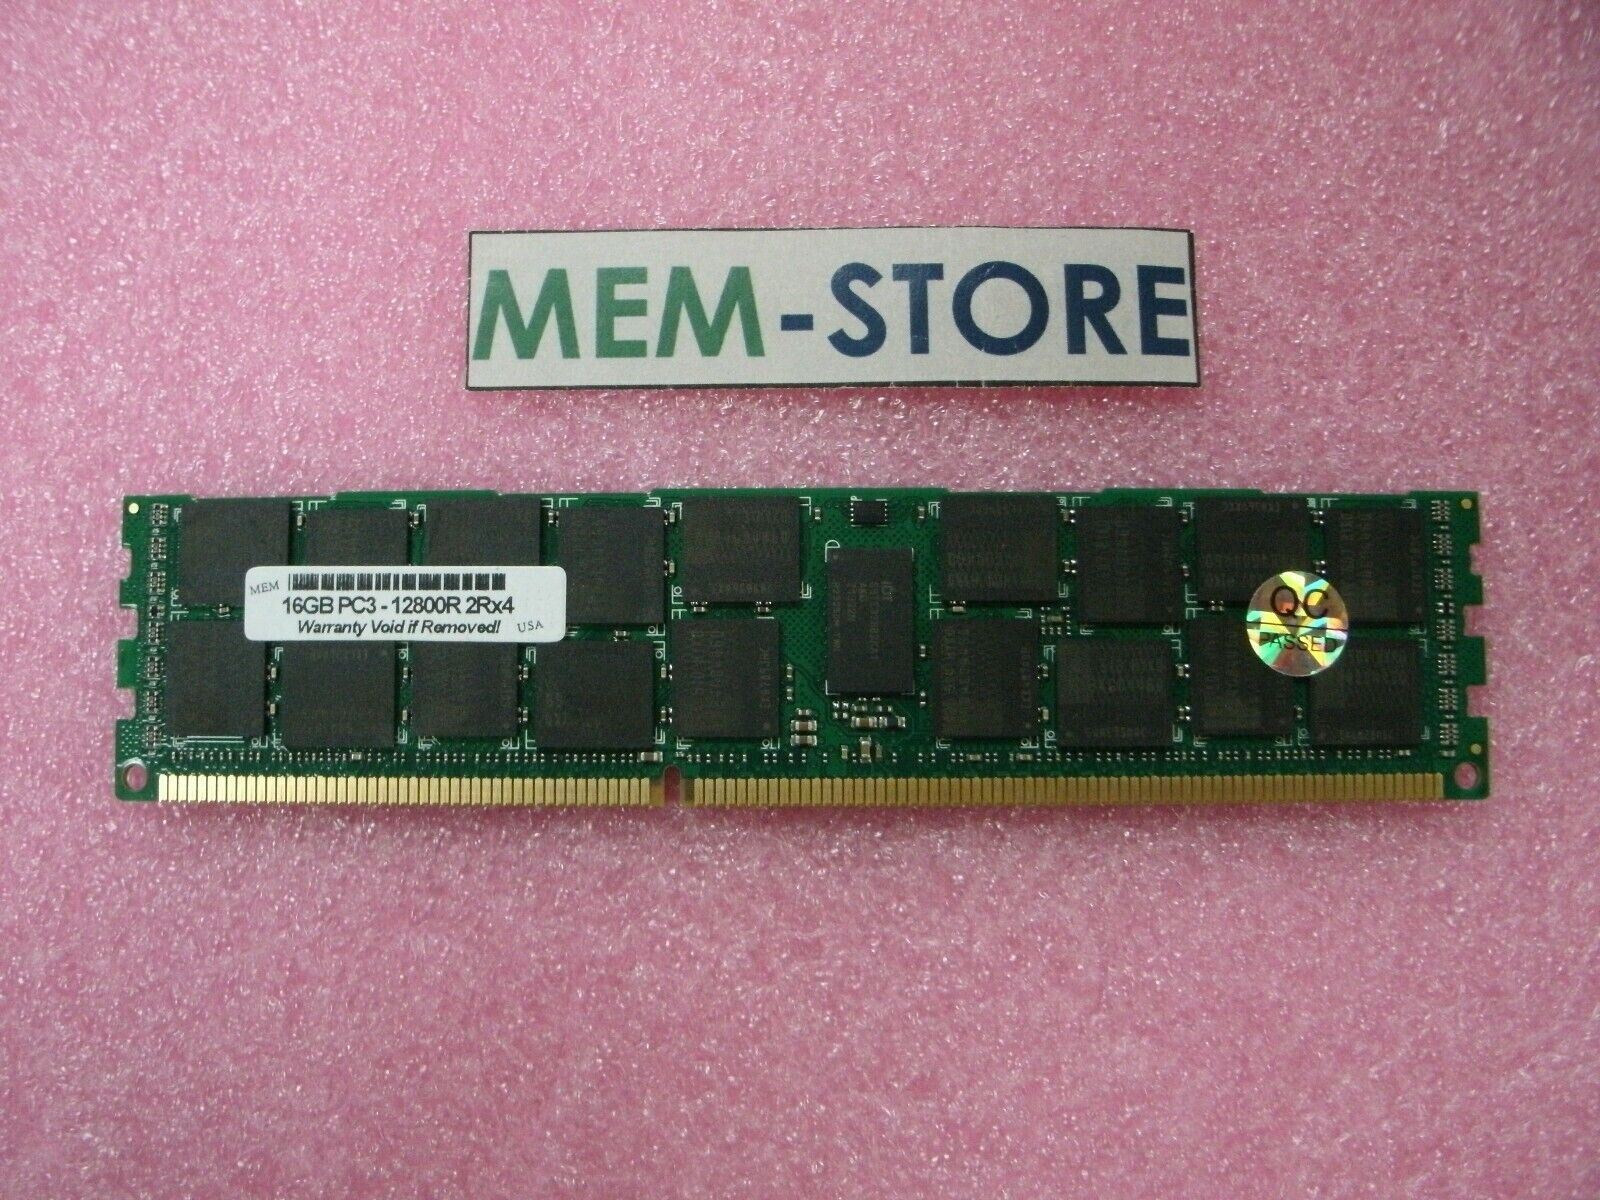 16GB DDR3-1600 ECC RDIMM Supermicro MEM-DR316L-SL04-ER16 Compatible RAM Memory (3rd Party) - image 2 of 2